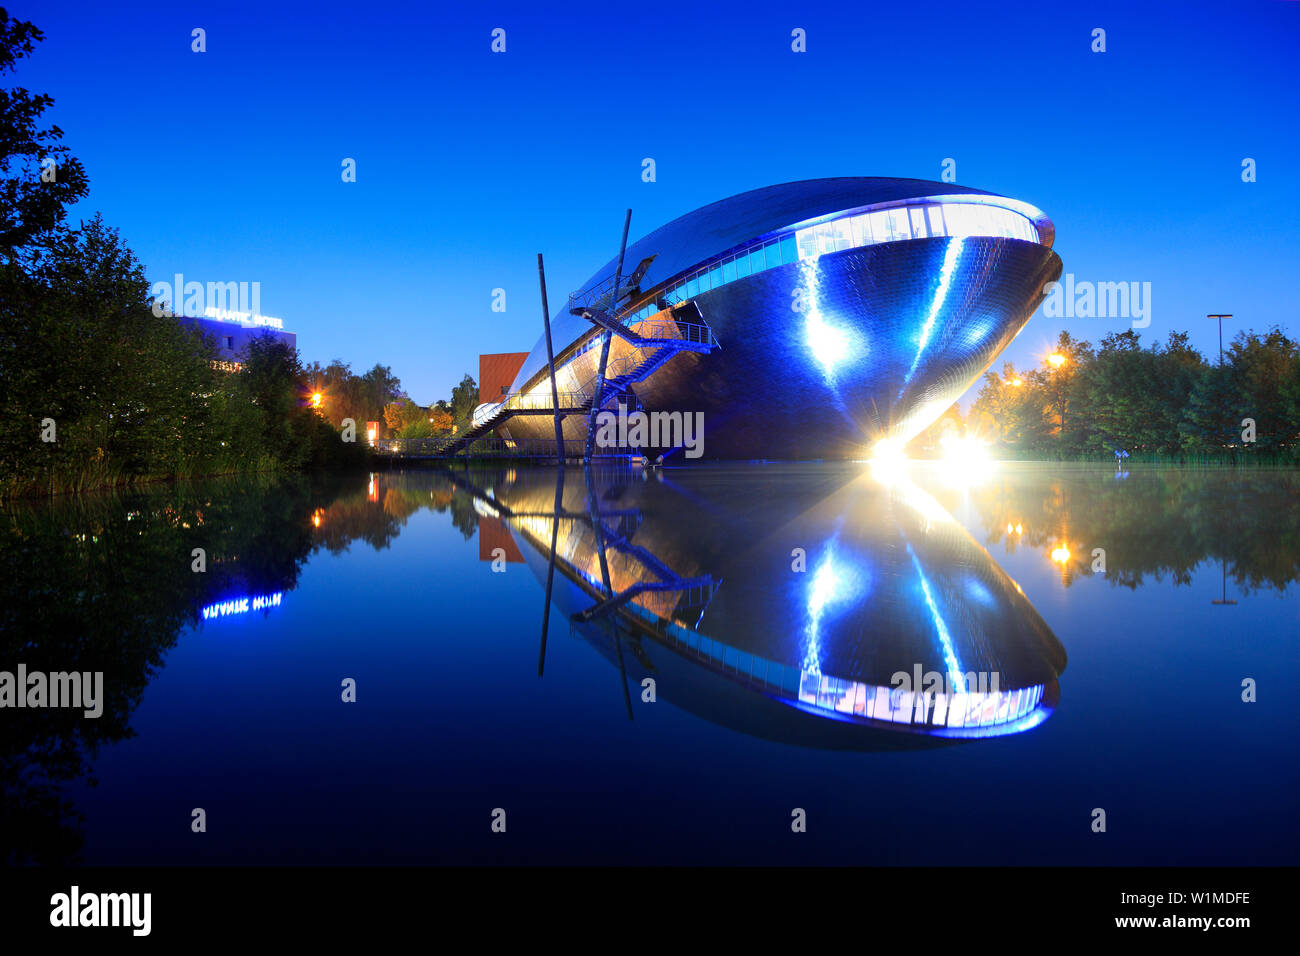 The illuminated science museum Universum in the evening, Hanseatic City of Bremen, Germany, Europe Stock Photo